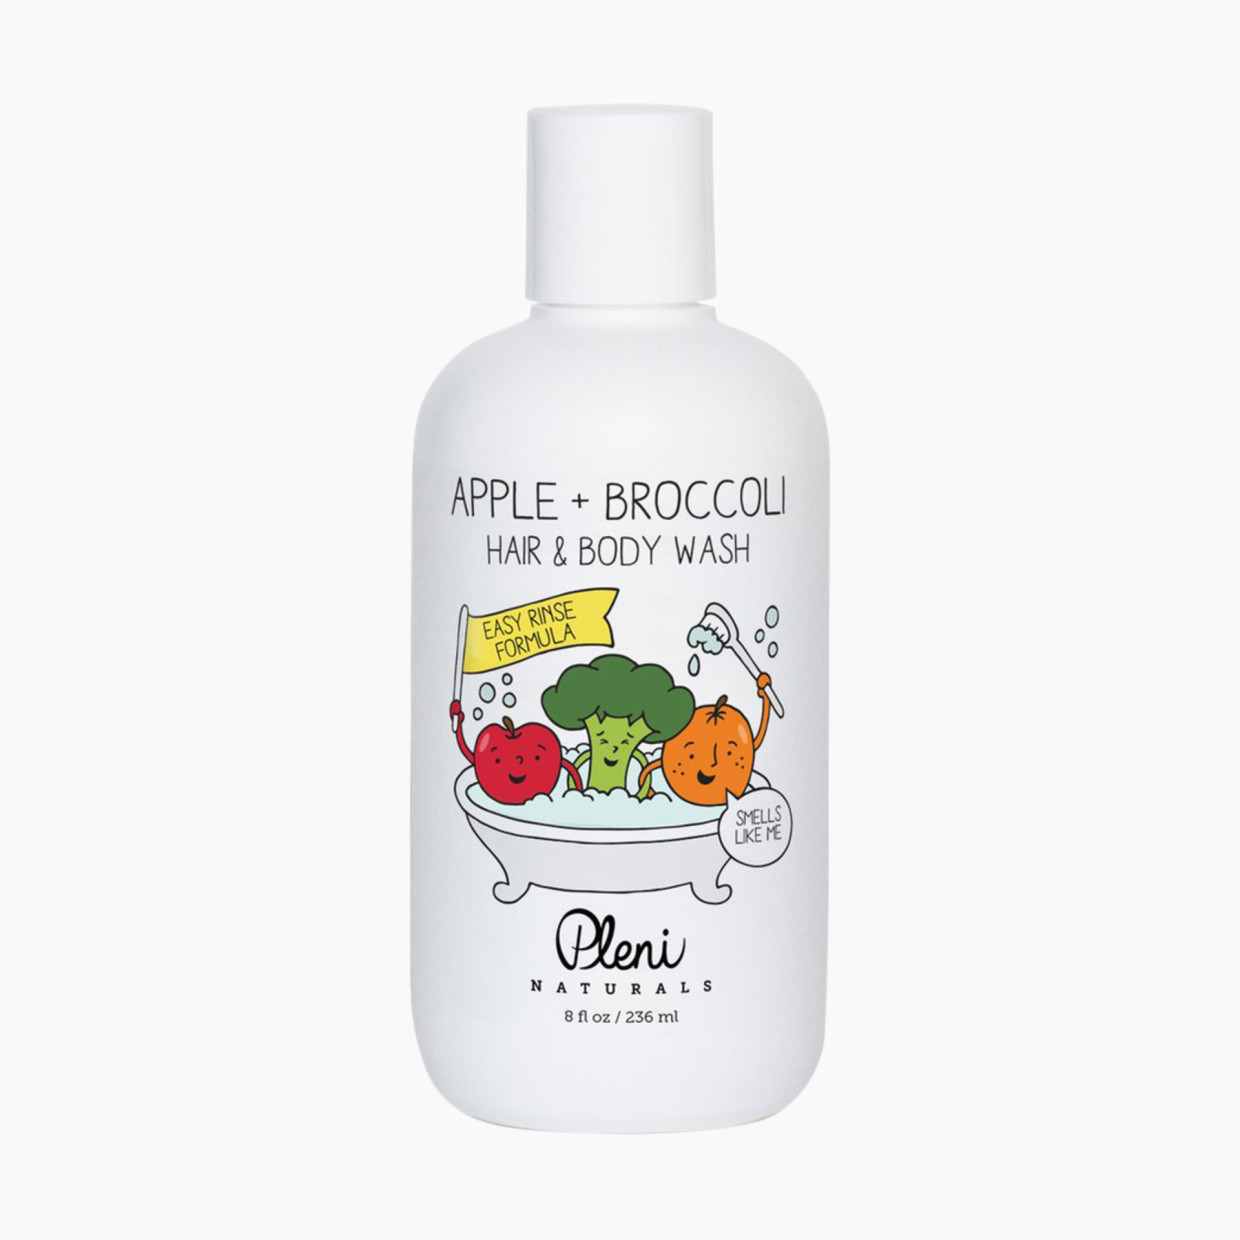 Pleni Naturals Apple & Broccoli Hair & Body Wash - 8 Oz.